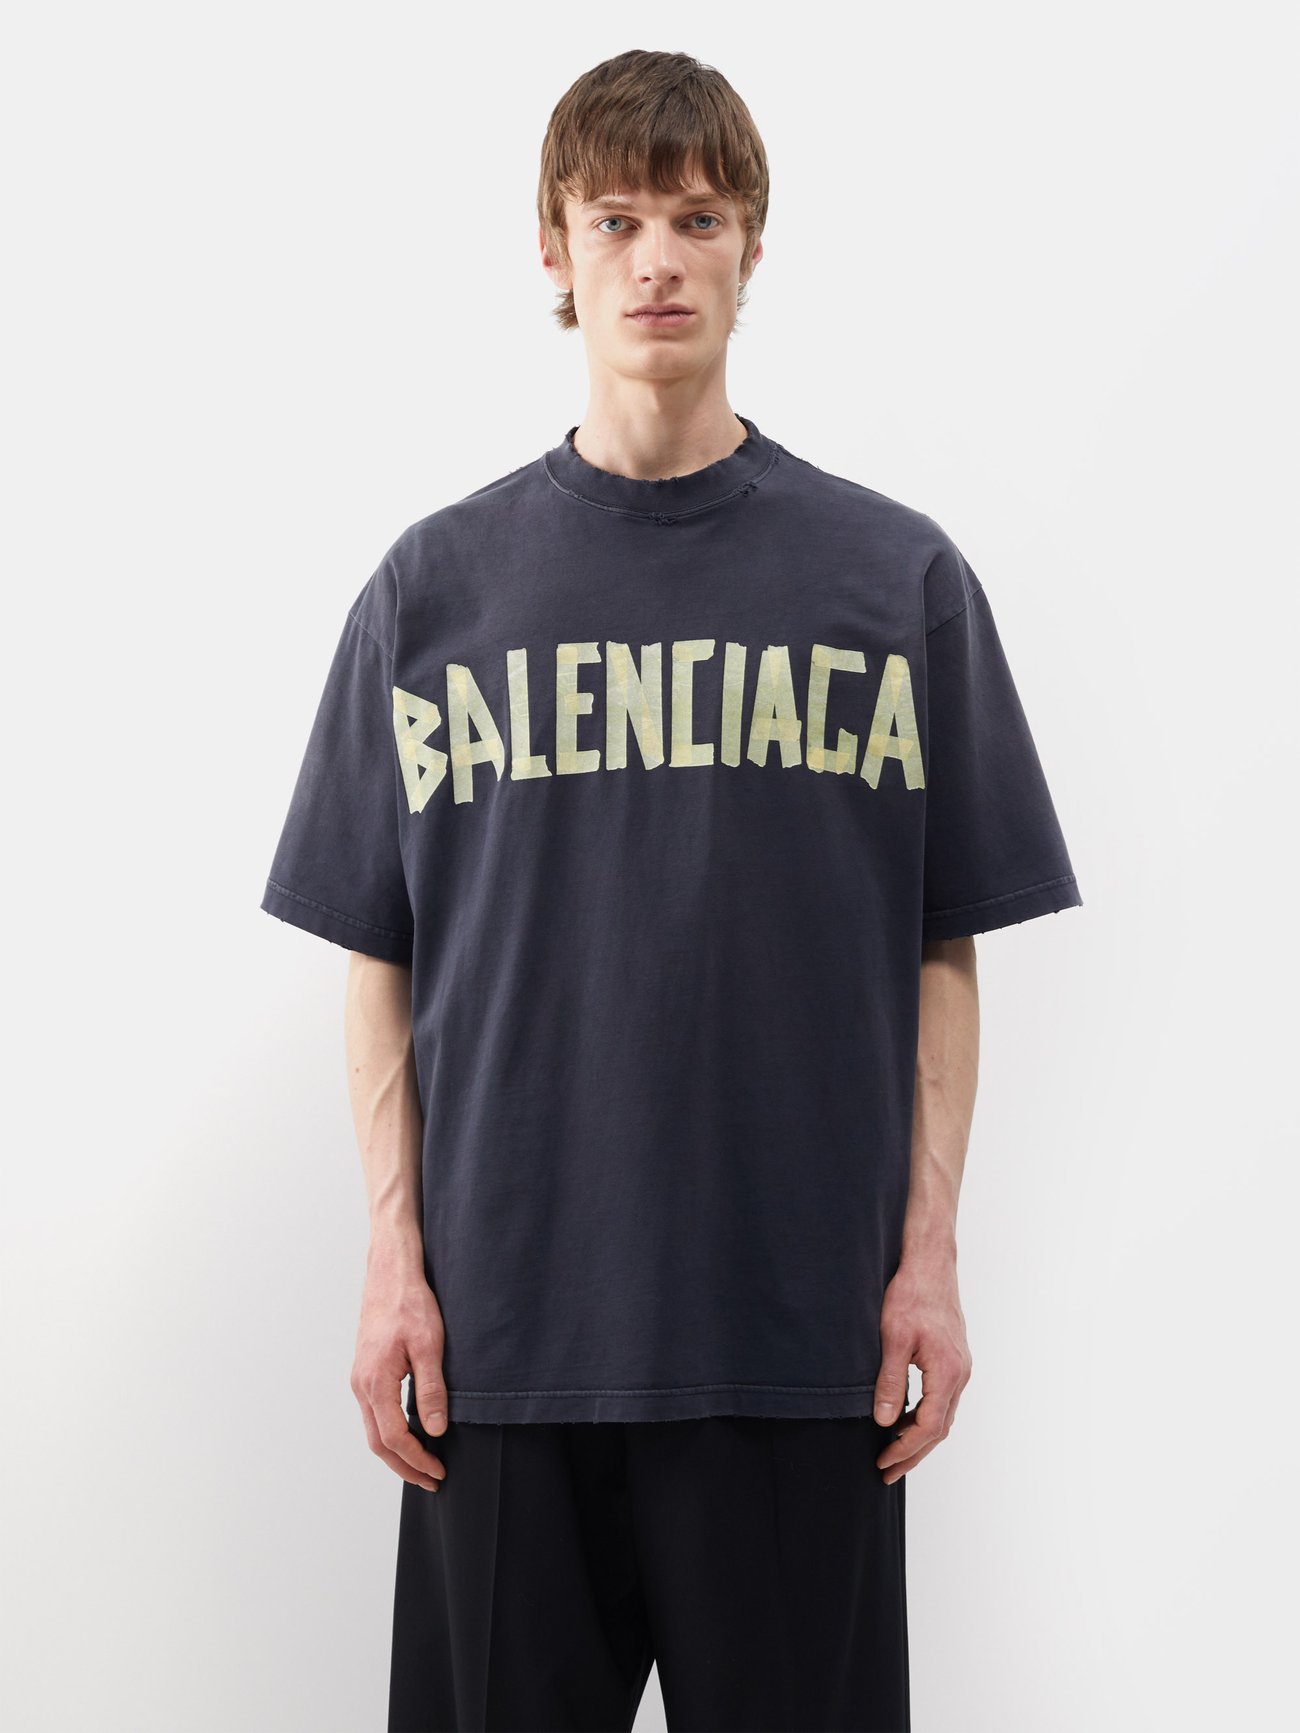 Balenciaga Tops  Tshirts  Men Women  Kids  Flannels